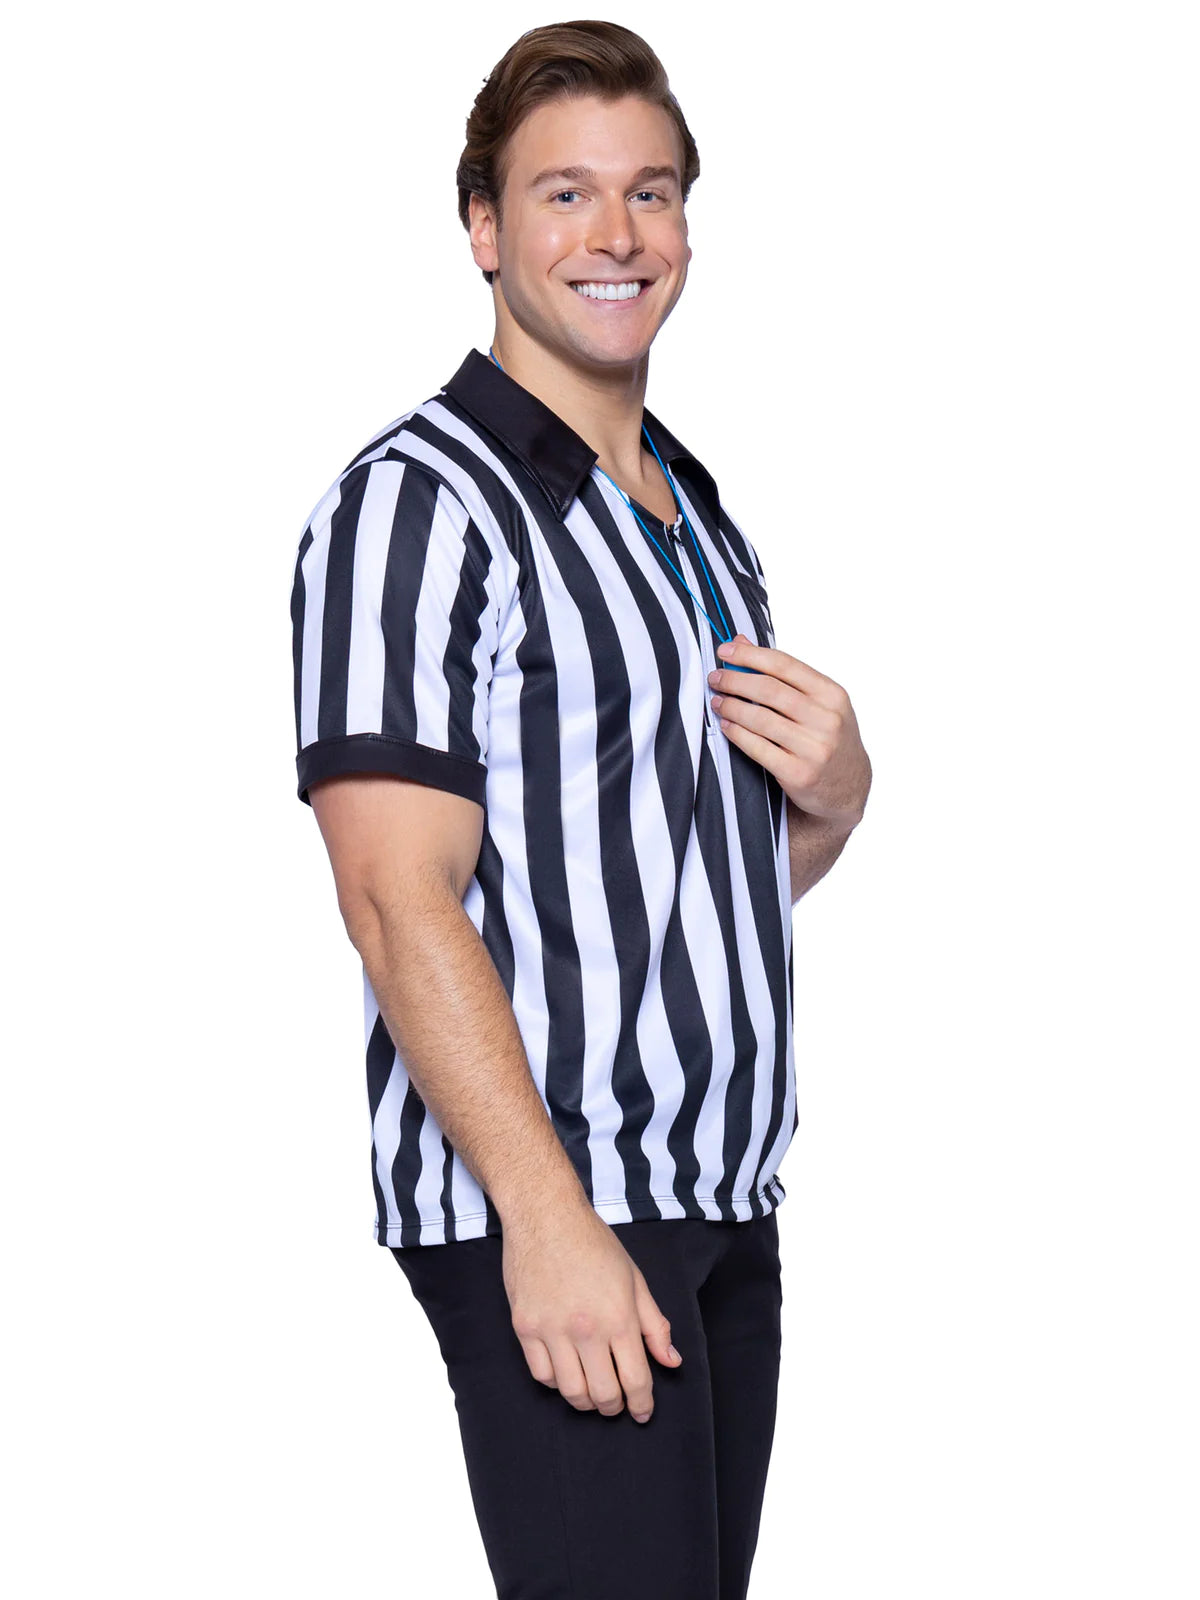 Referee Men's Shirt w/ Whistle